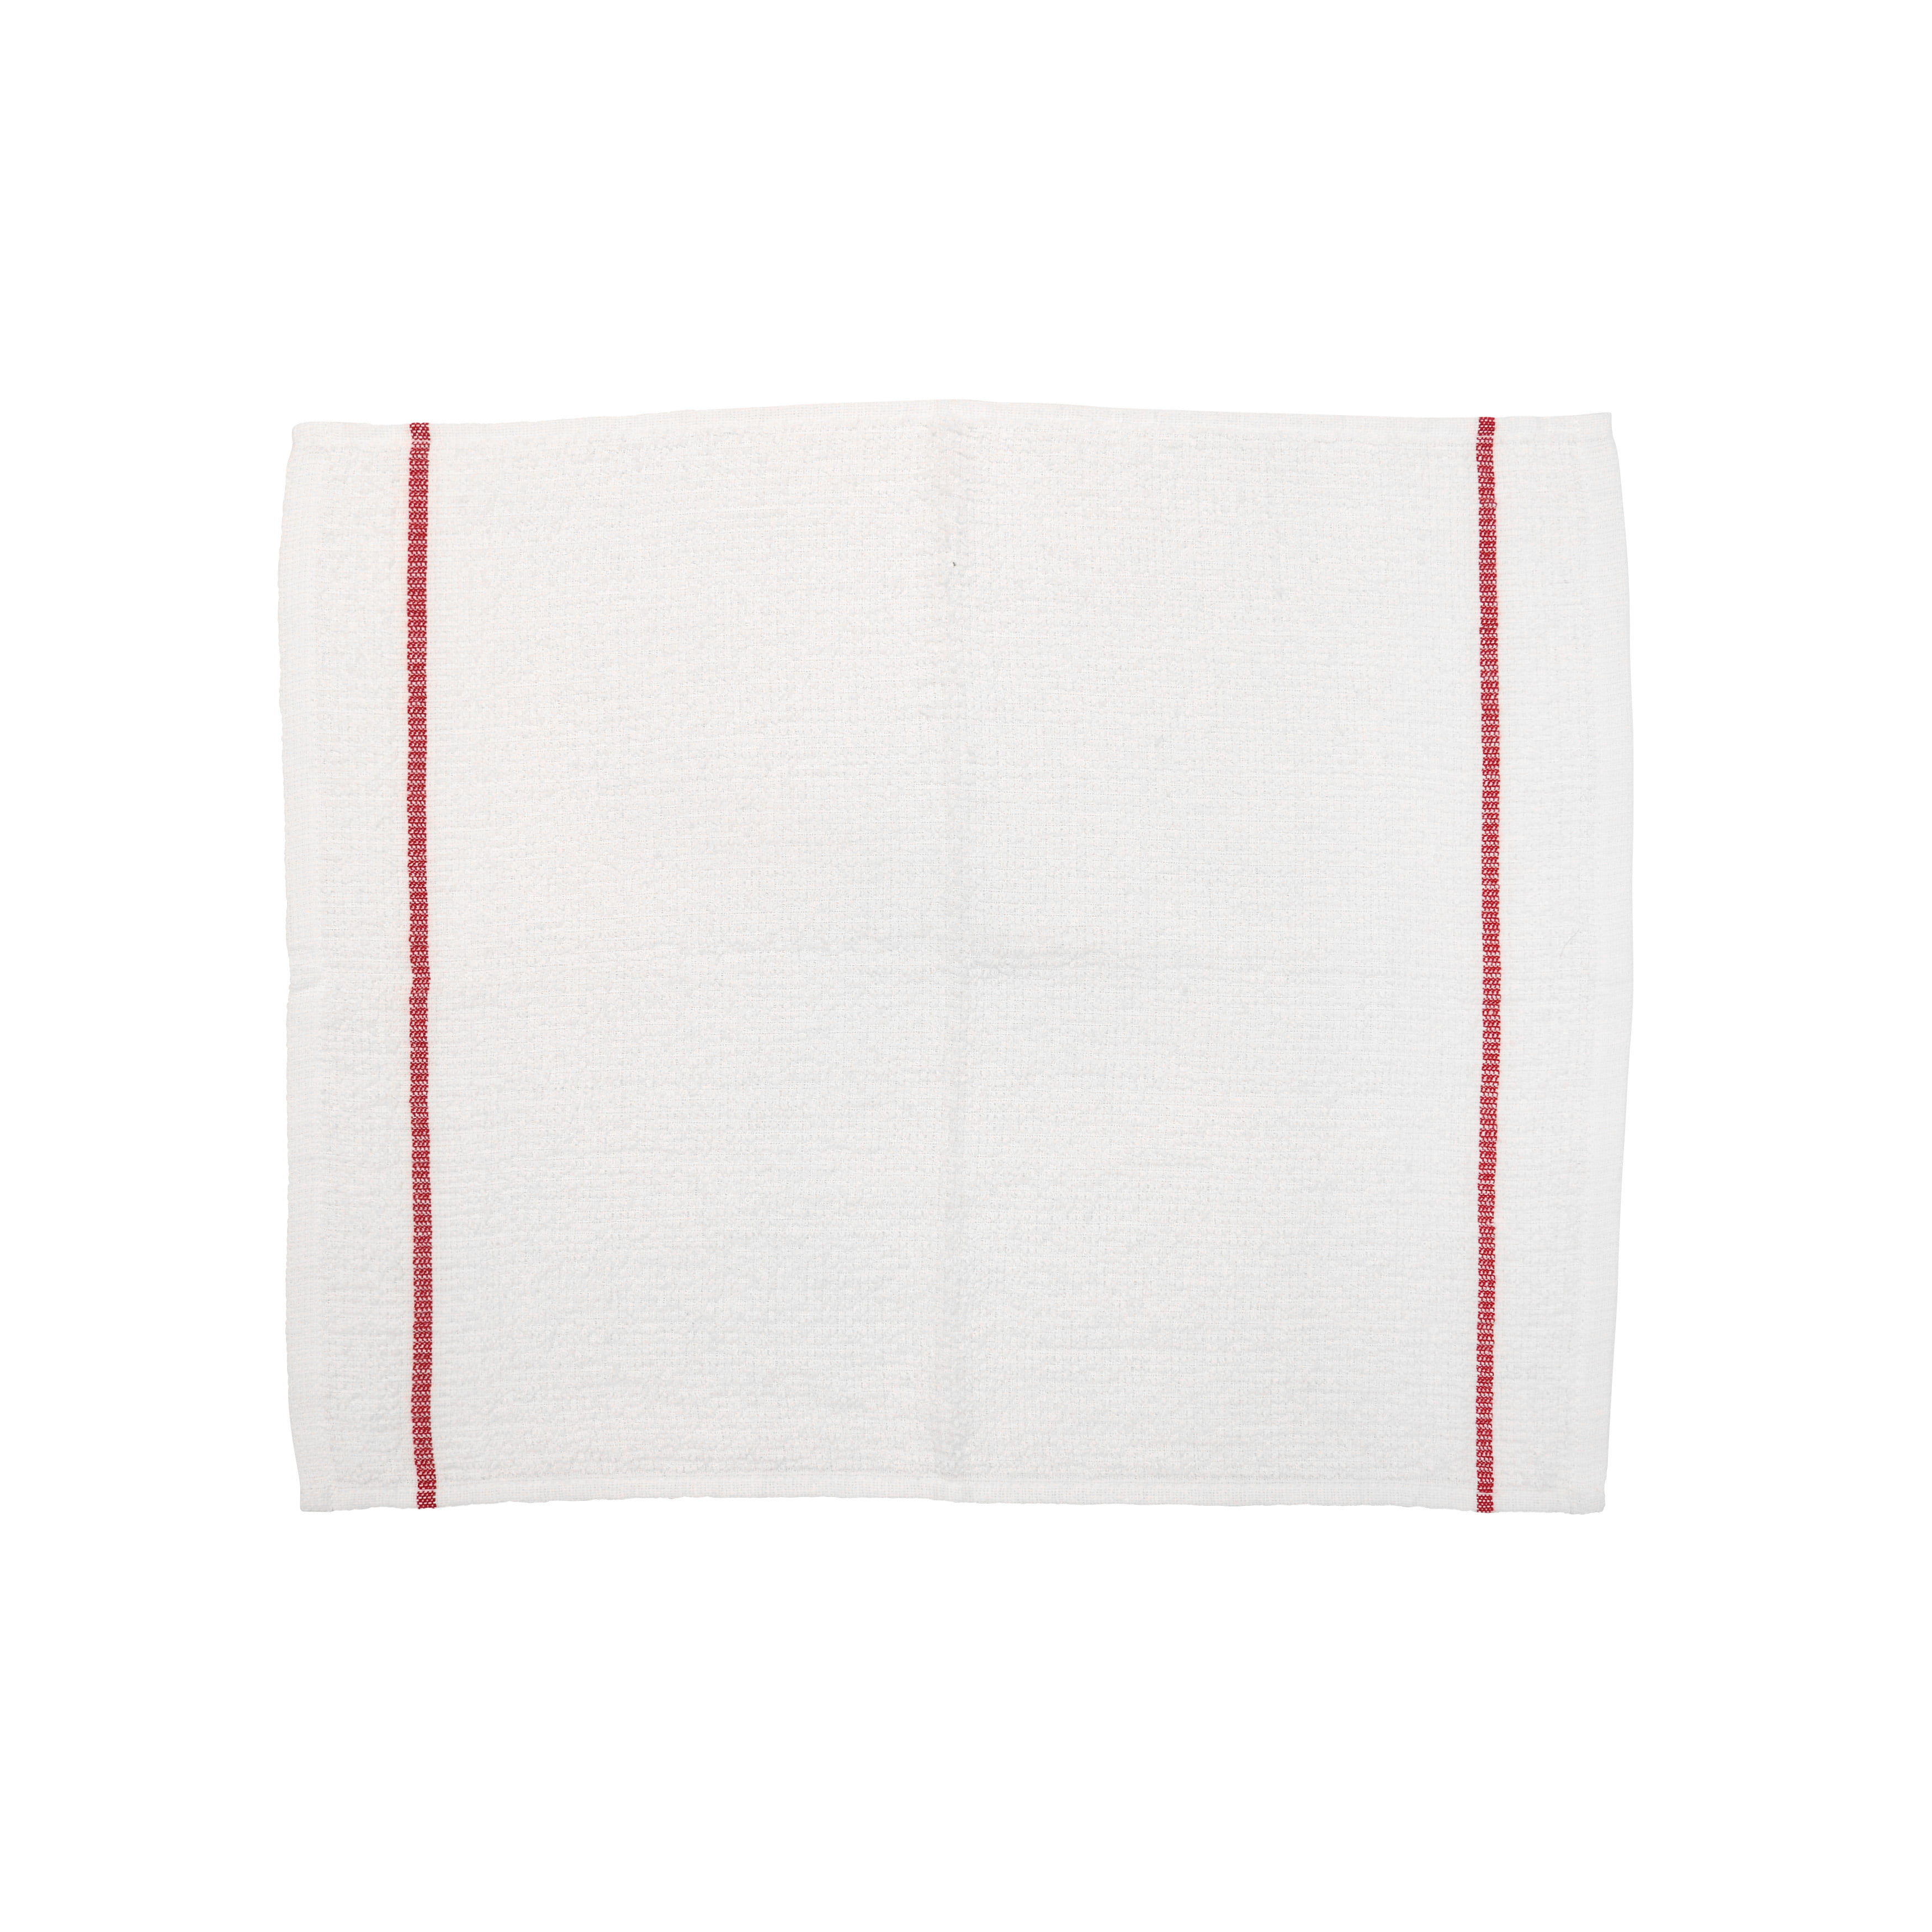 Choice 16 x 19 White 24 oz. Cotton Textured Terry Bar Towel - 12